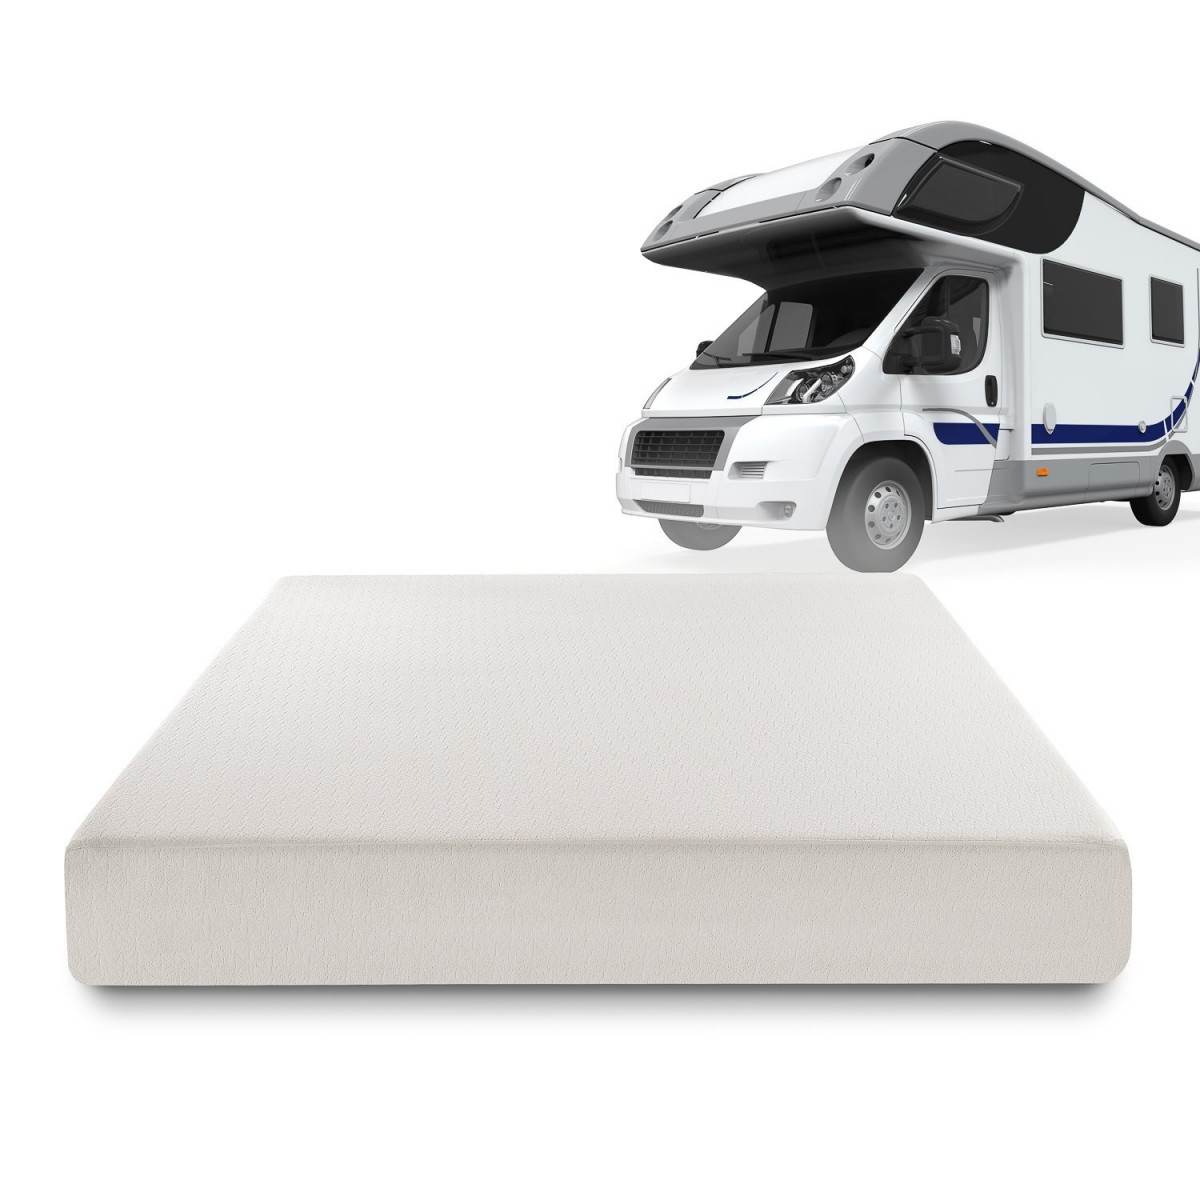 Zinus Sleep Master Deluxe RV:Camper:Trailer:Truck Memory Foam Mattress